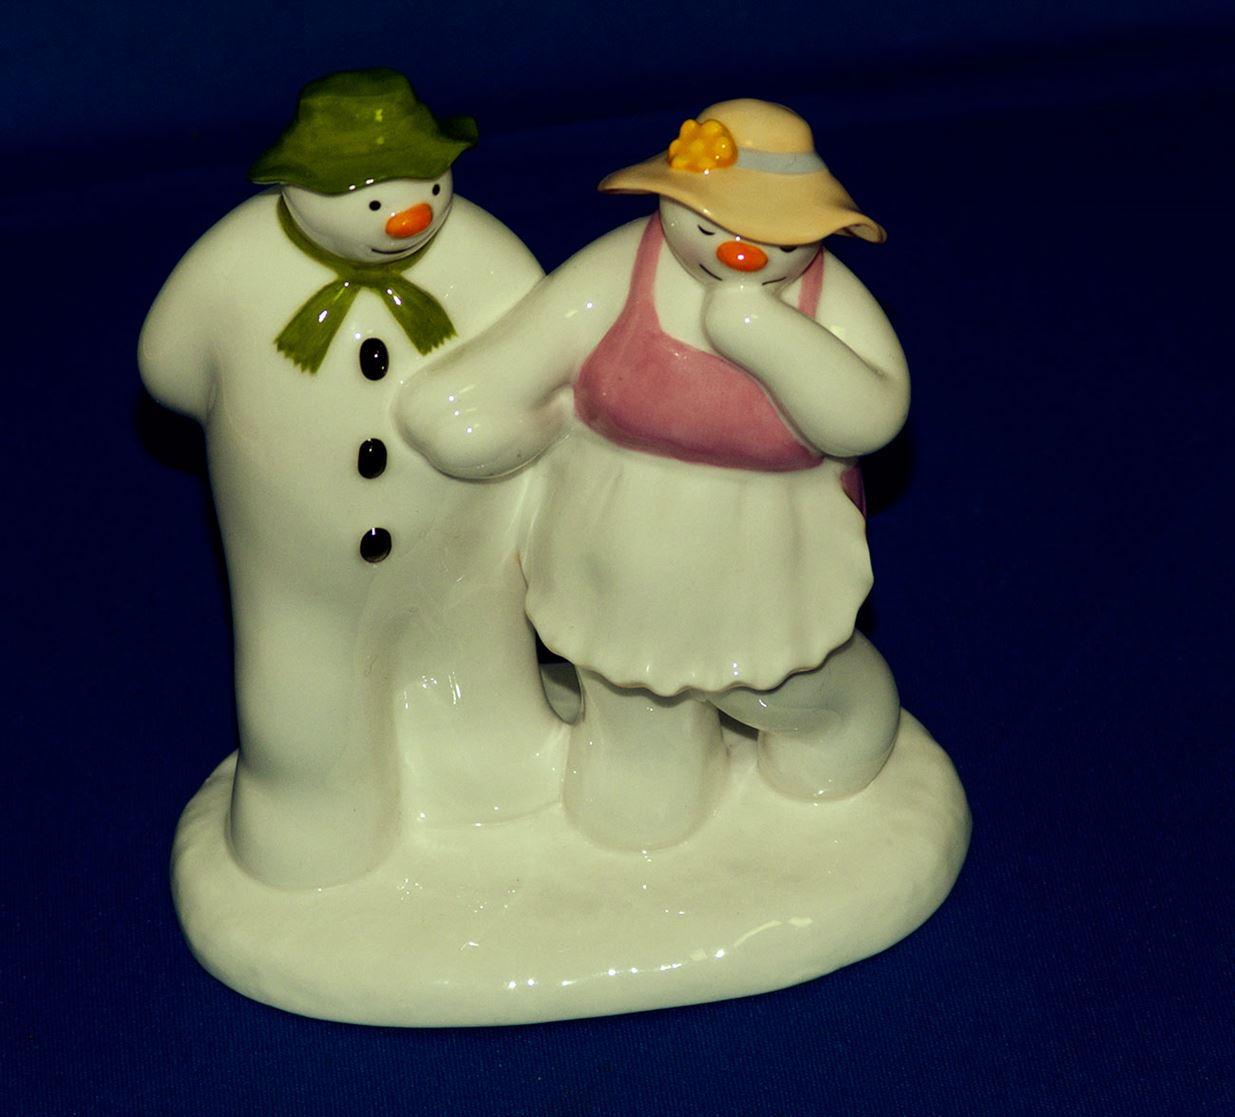 The snowman core the bashful blush figurine